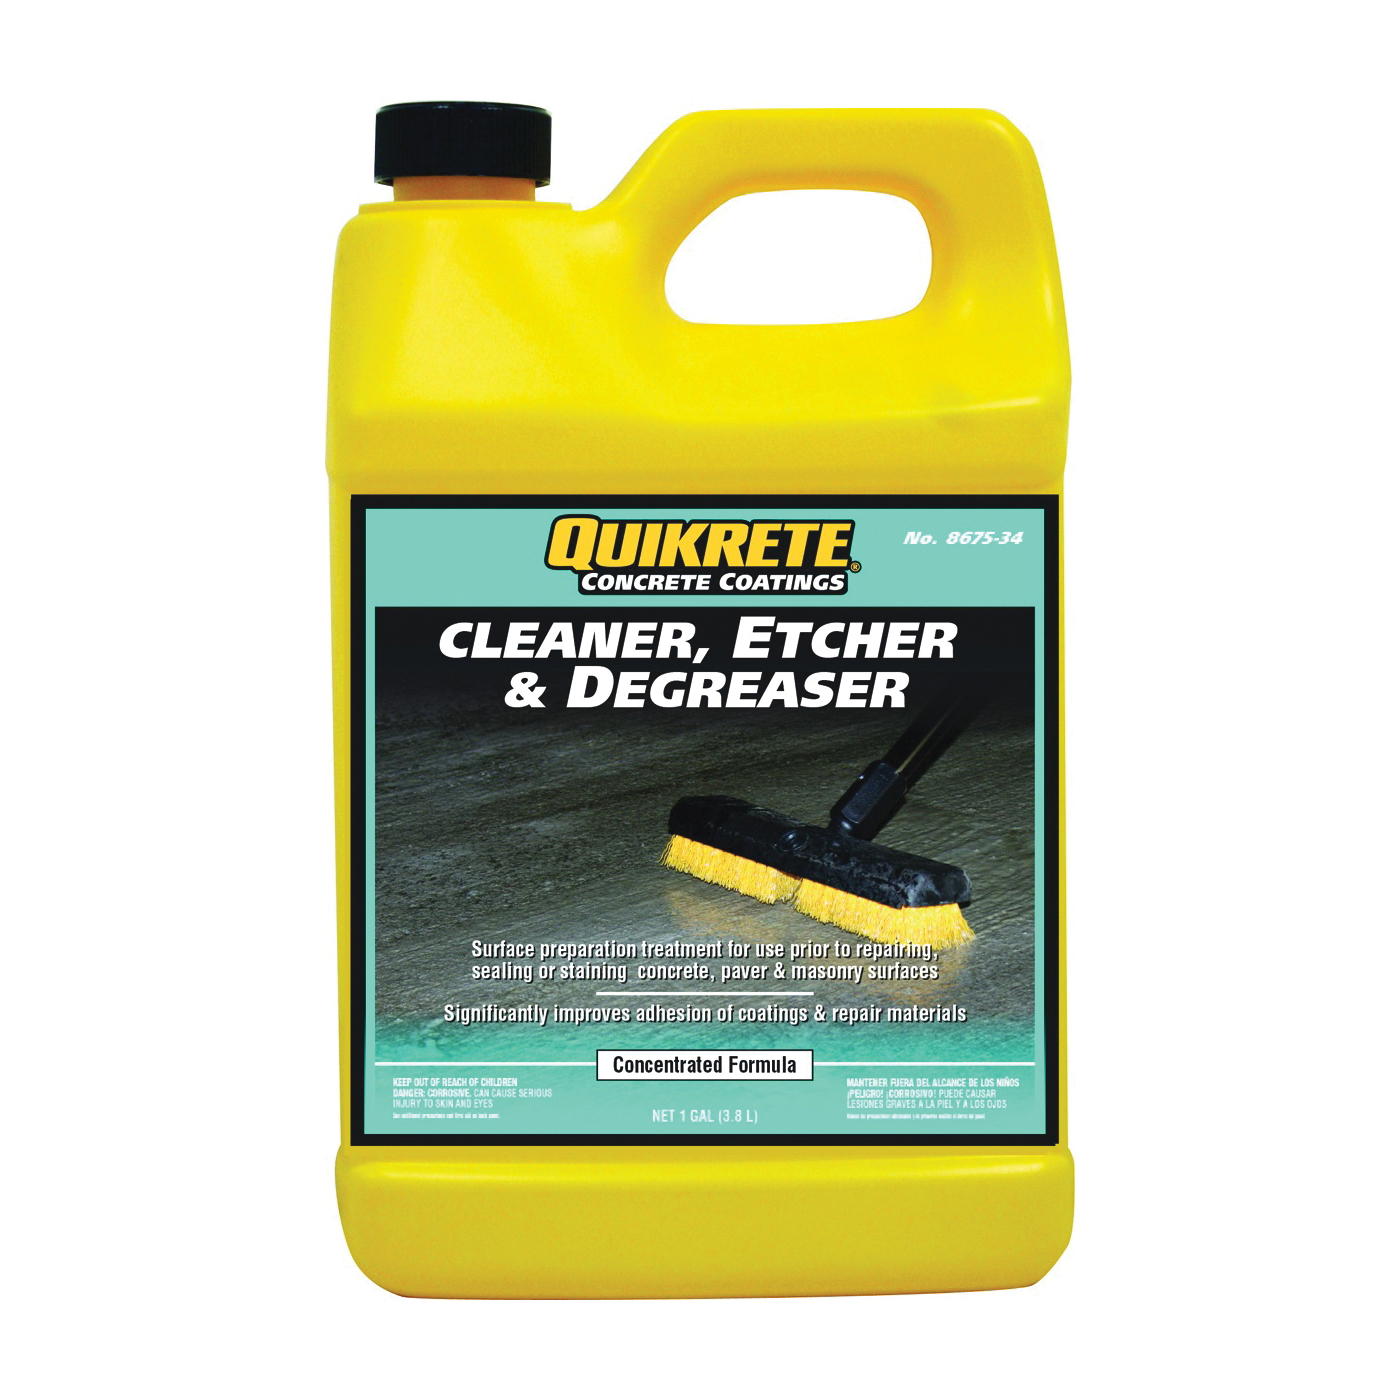 8675-34 Cleaner, Liquid, Mild, Pale Yellow, 1 gal, Bottle